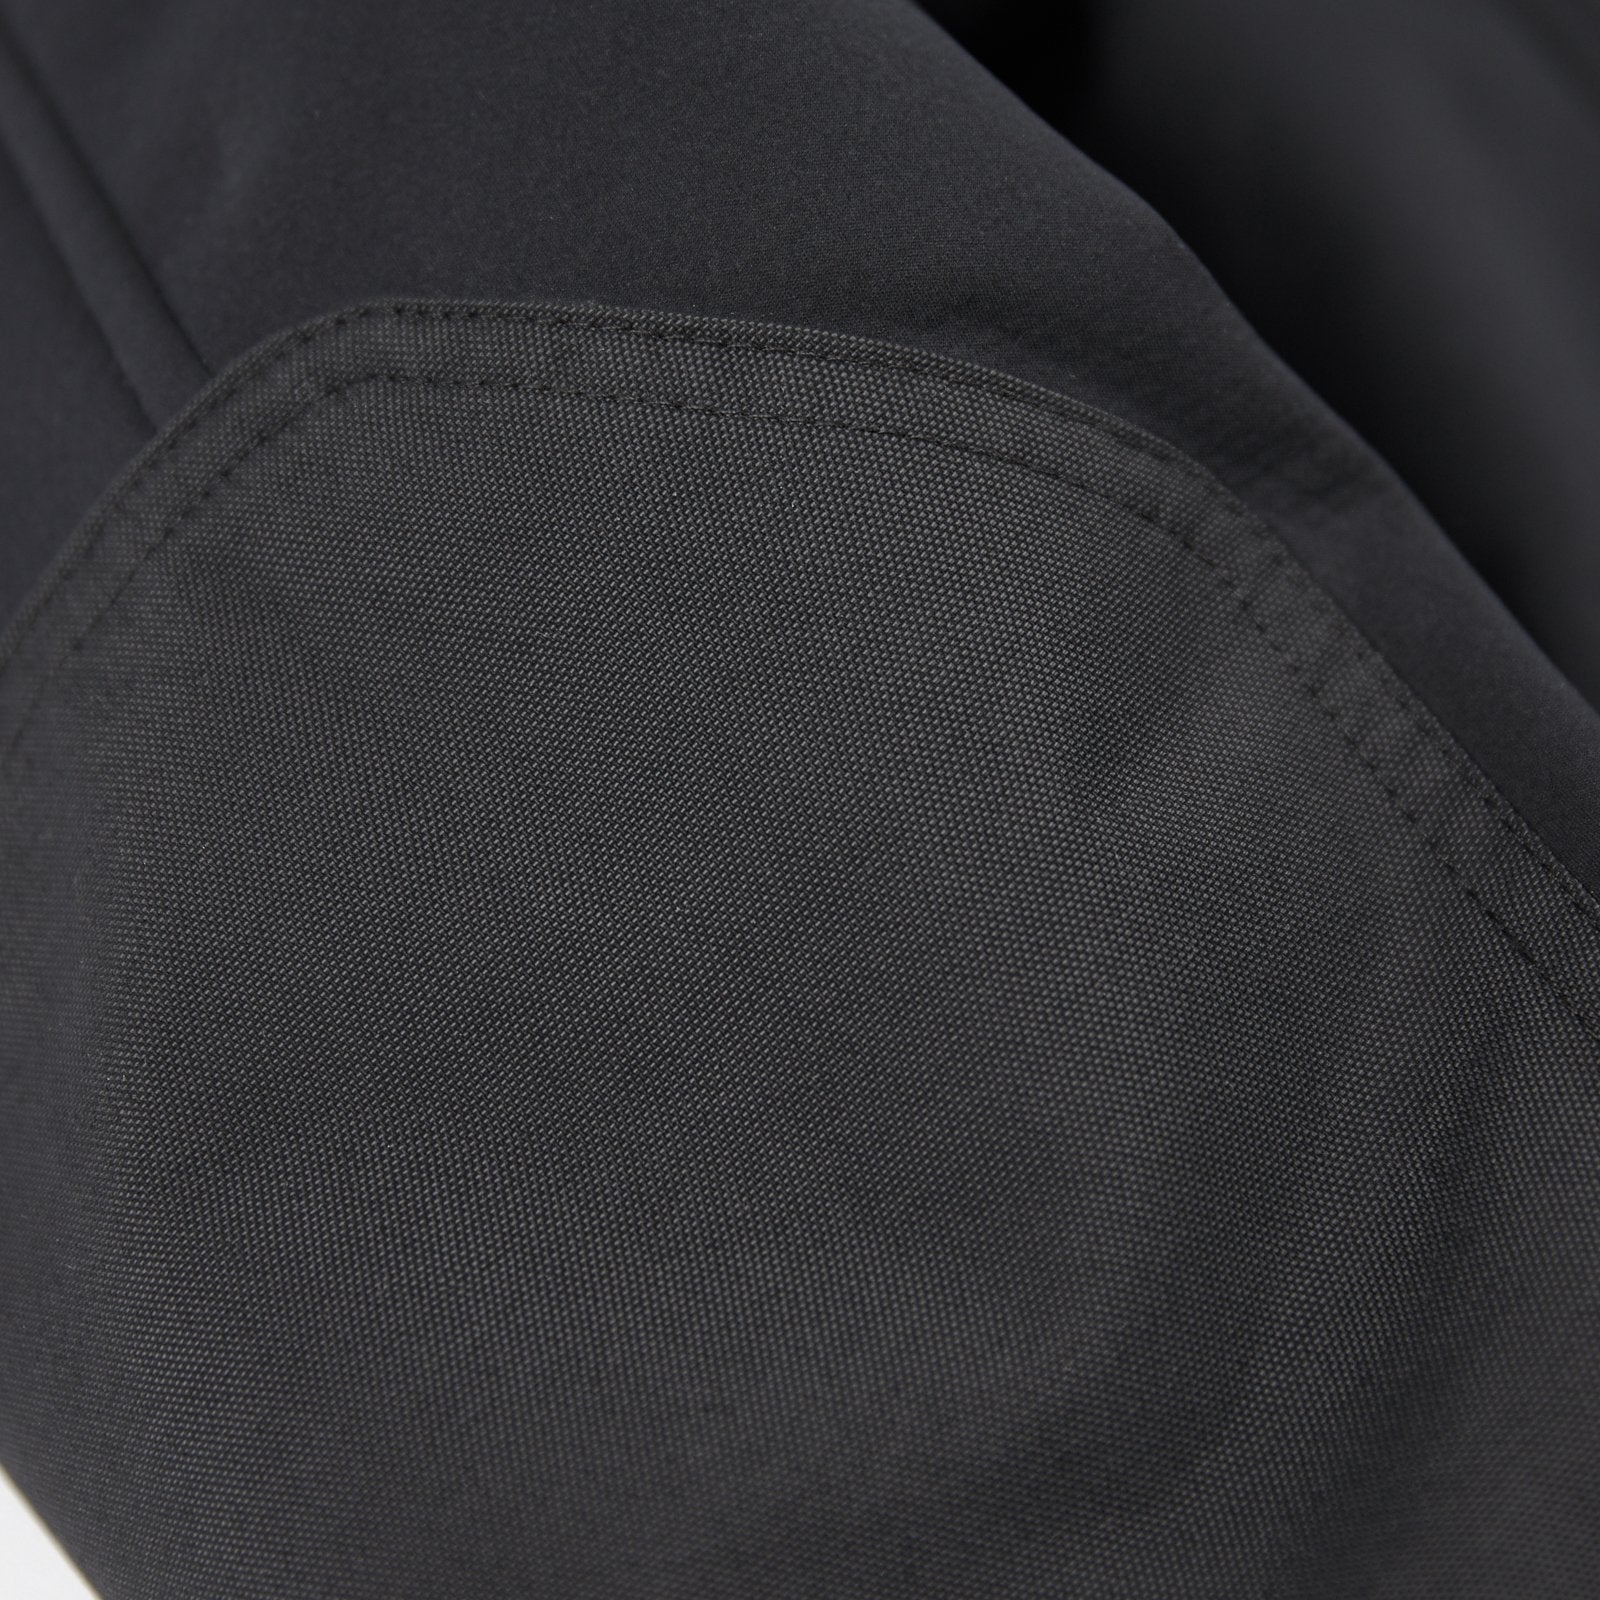 VIKTOS Bersherken Jacket Nightfjall Outerwear VIKTOS Tactical Gear Supplier Tactical Distributors Australia